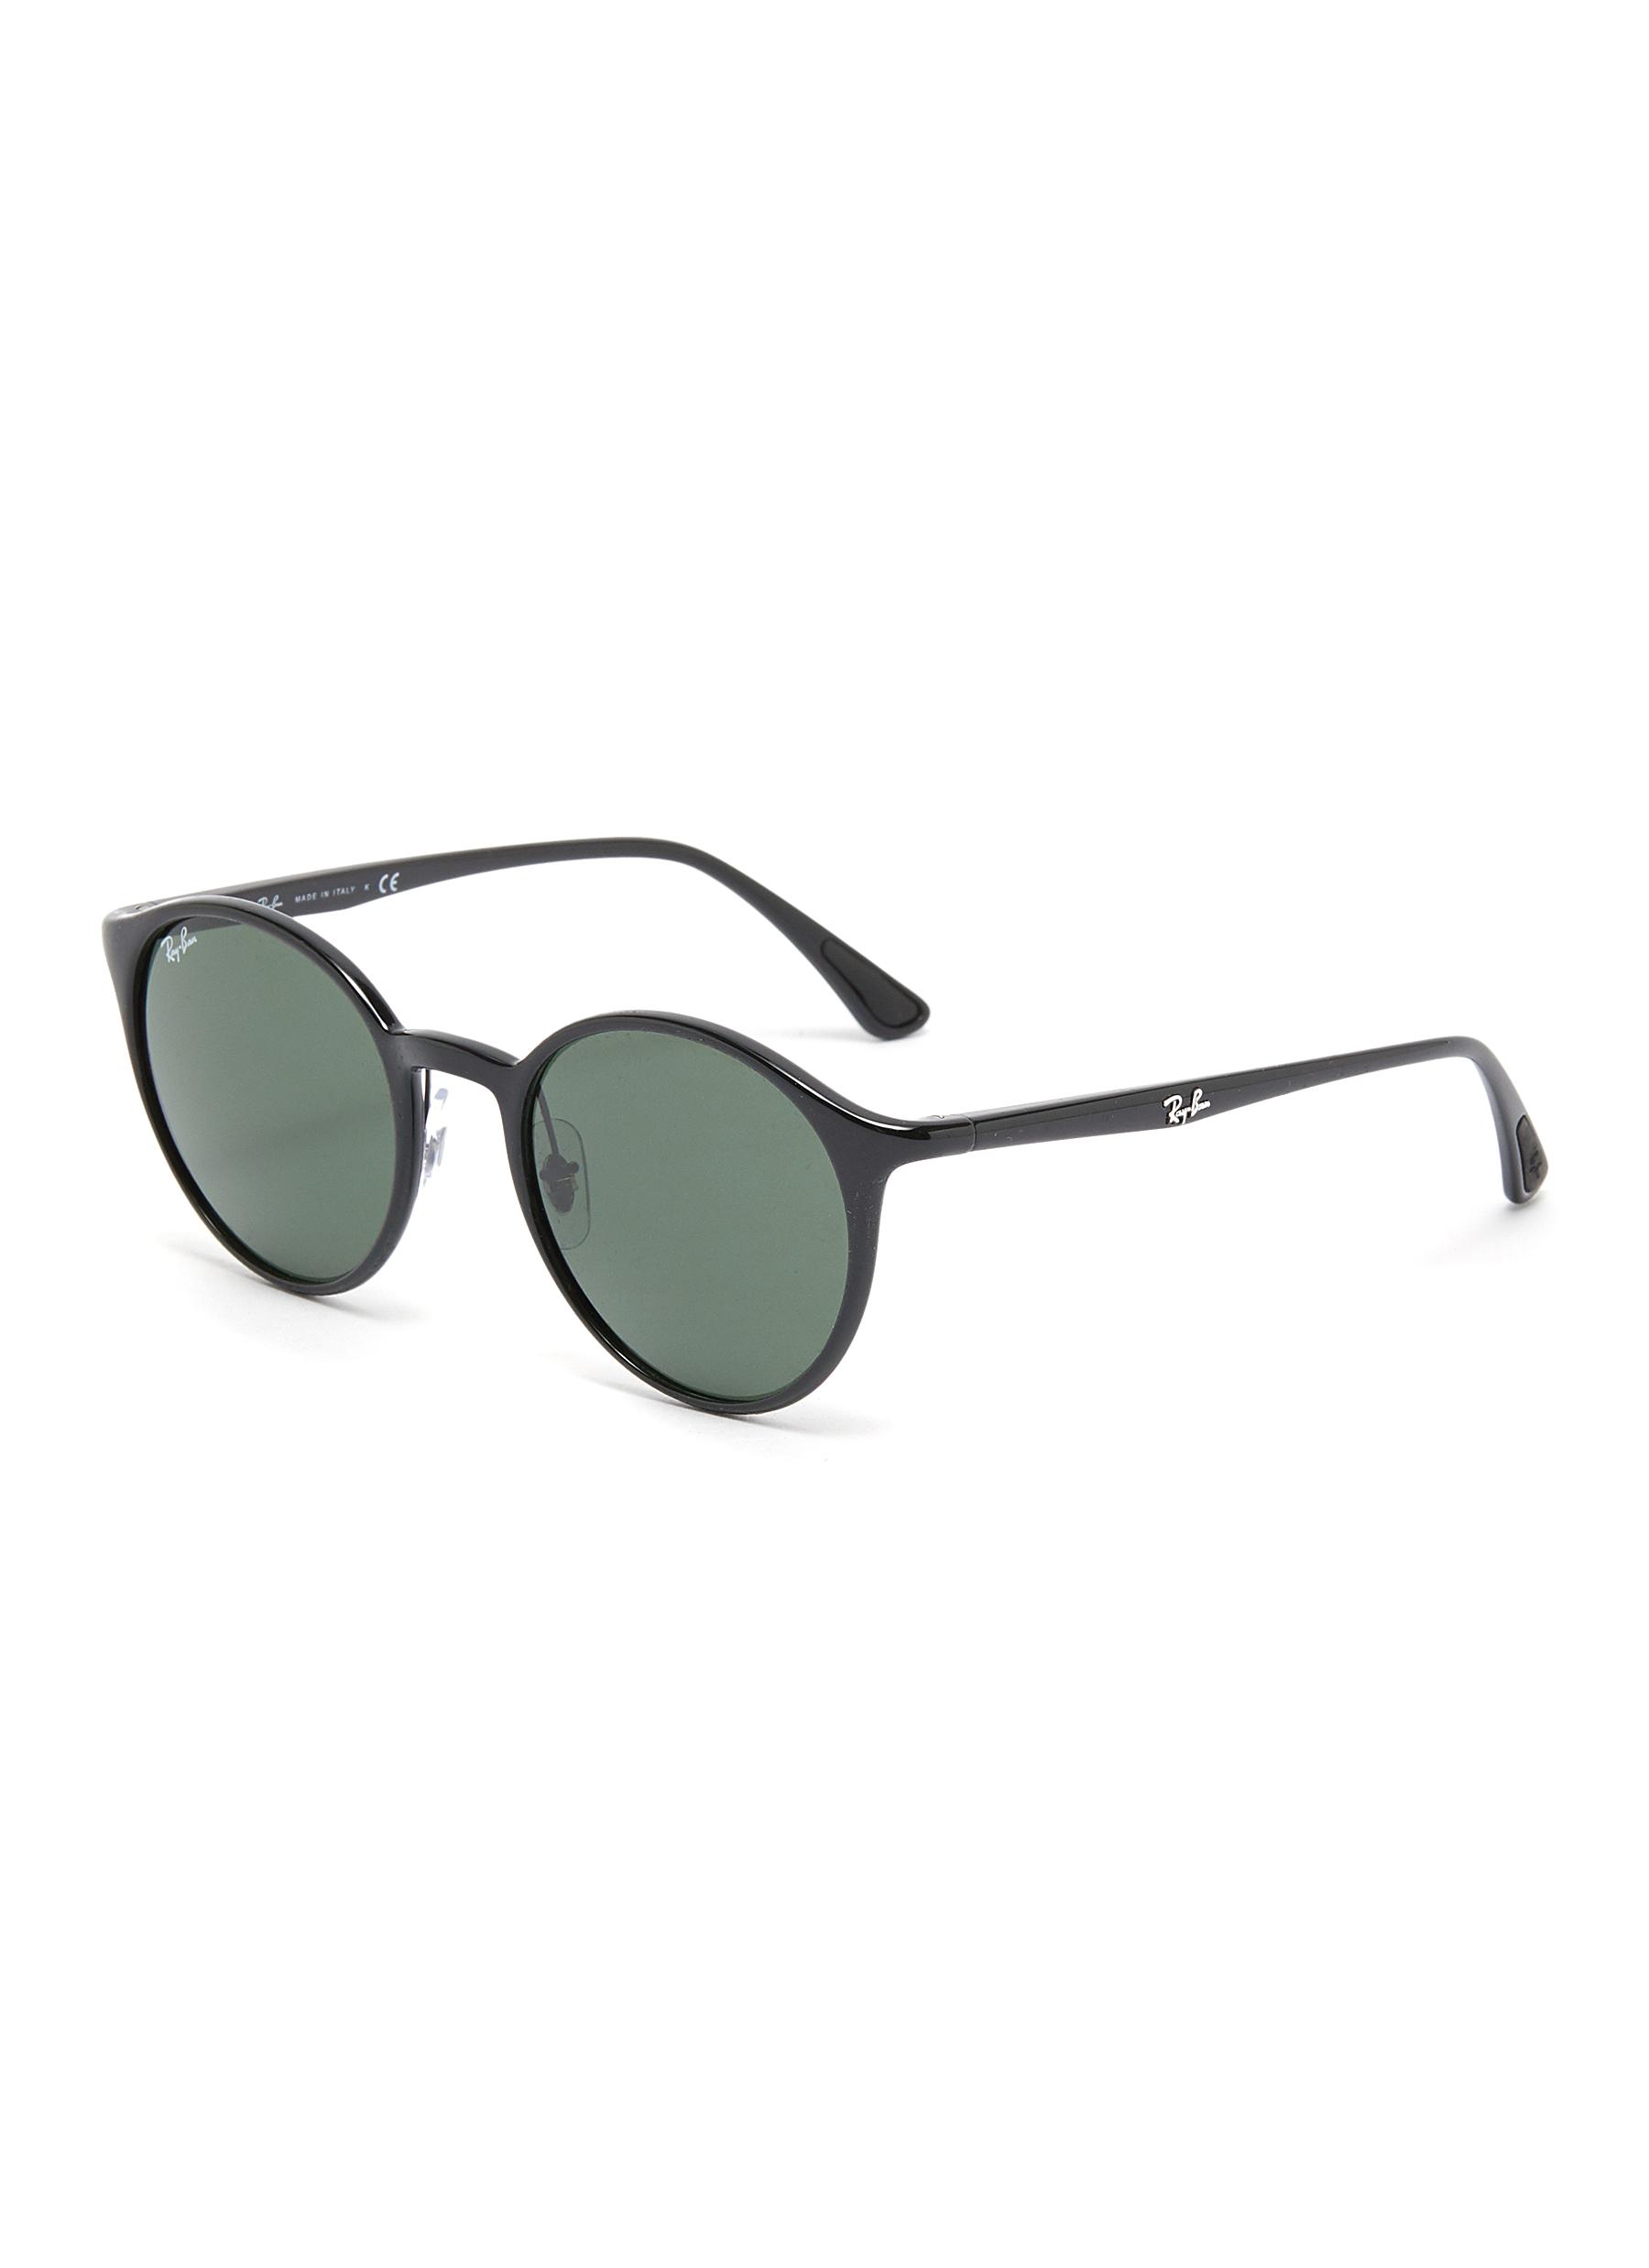 ray ban round frame sunglasses